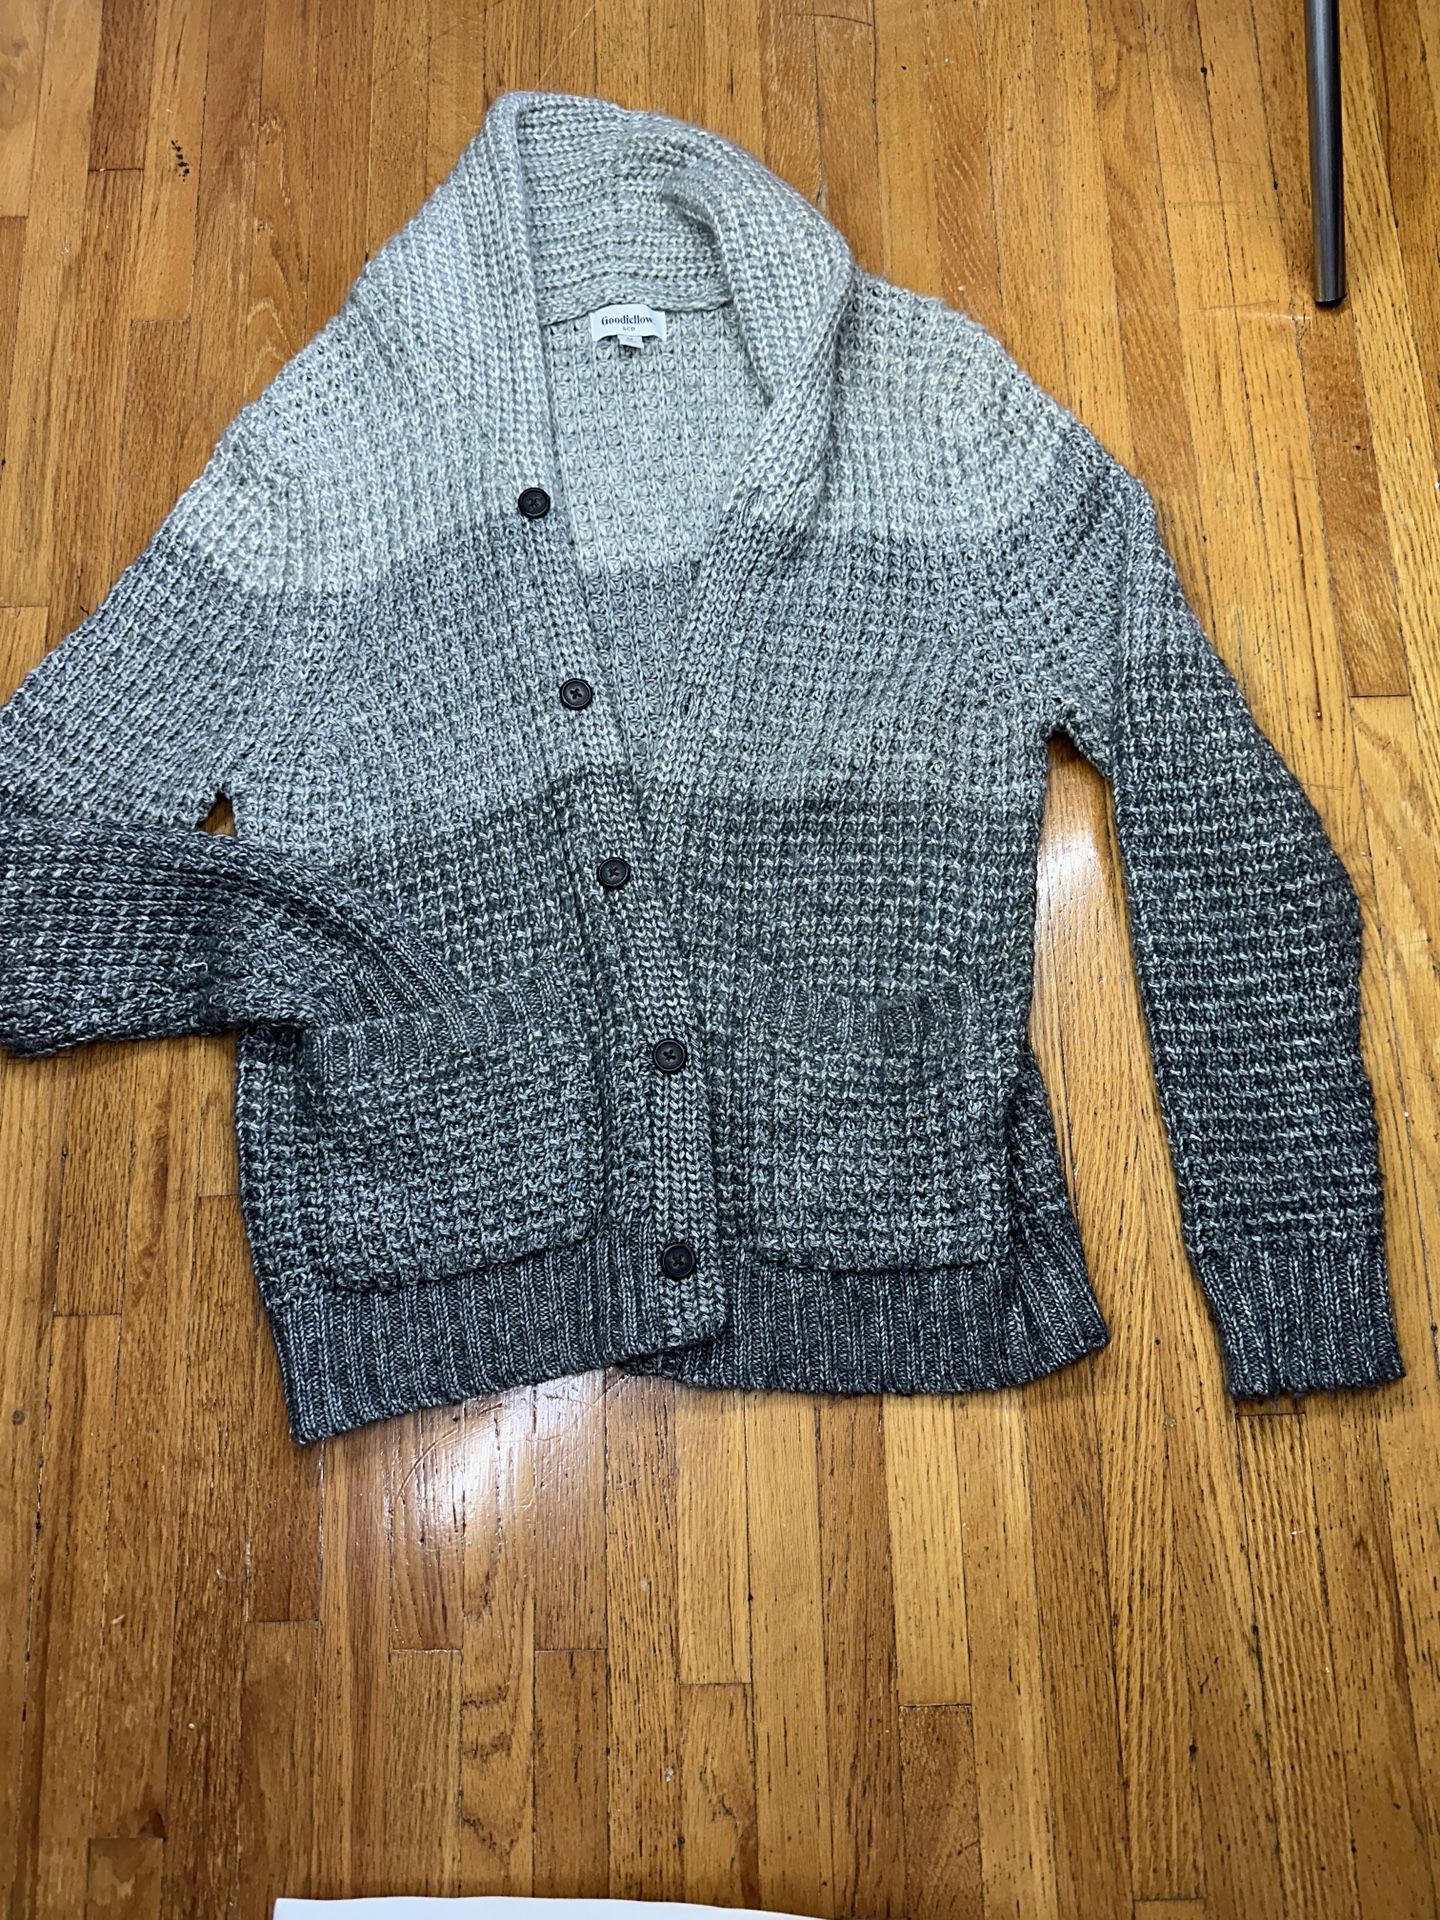 Cardigan Sweater Grey Men’s Size Medium